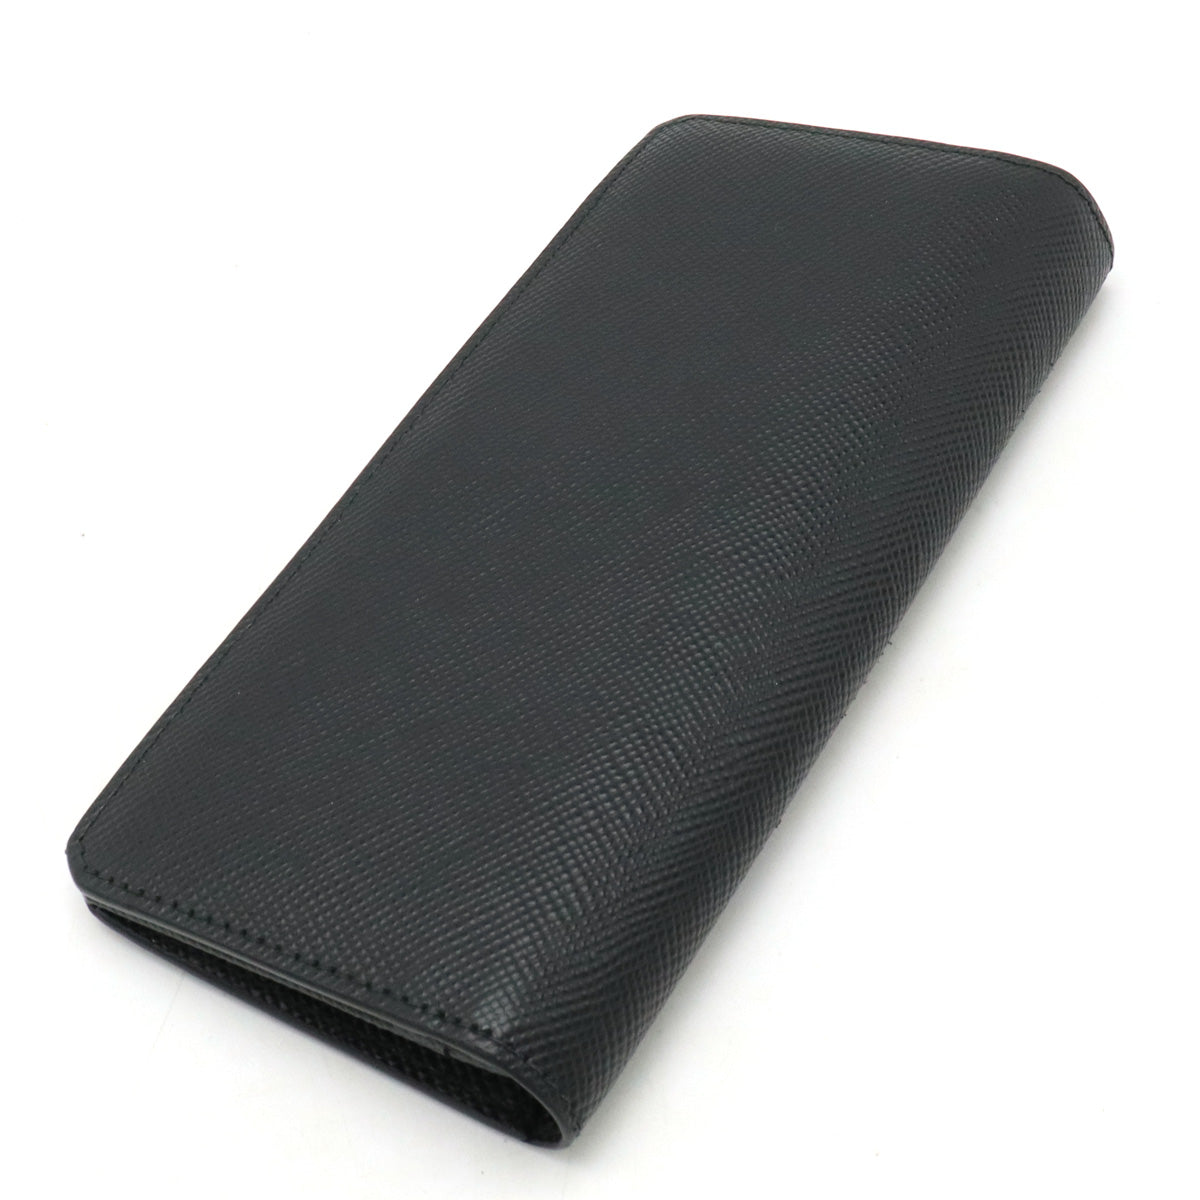 PRADA PRADA SAFFIANO CUIR C Double Folded Wallet Two Folded Wallet Sapphire Leather NERO Black Silver  Domestic Boutique Purchases 2MV836